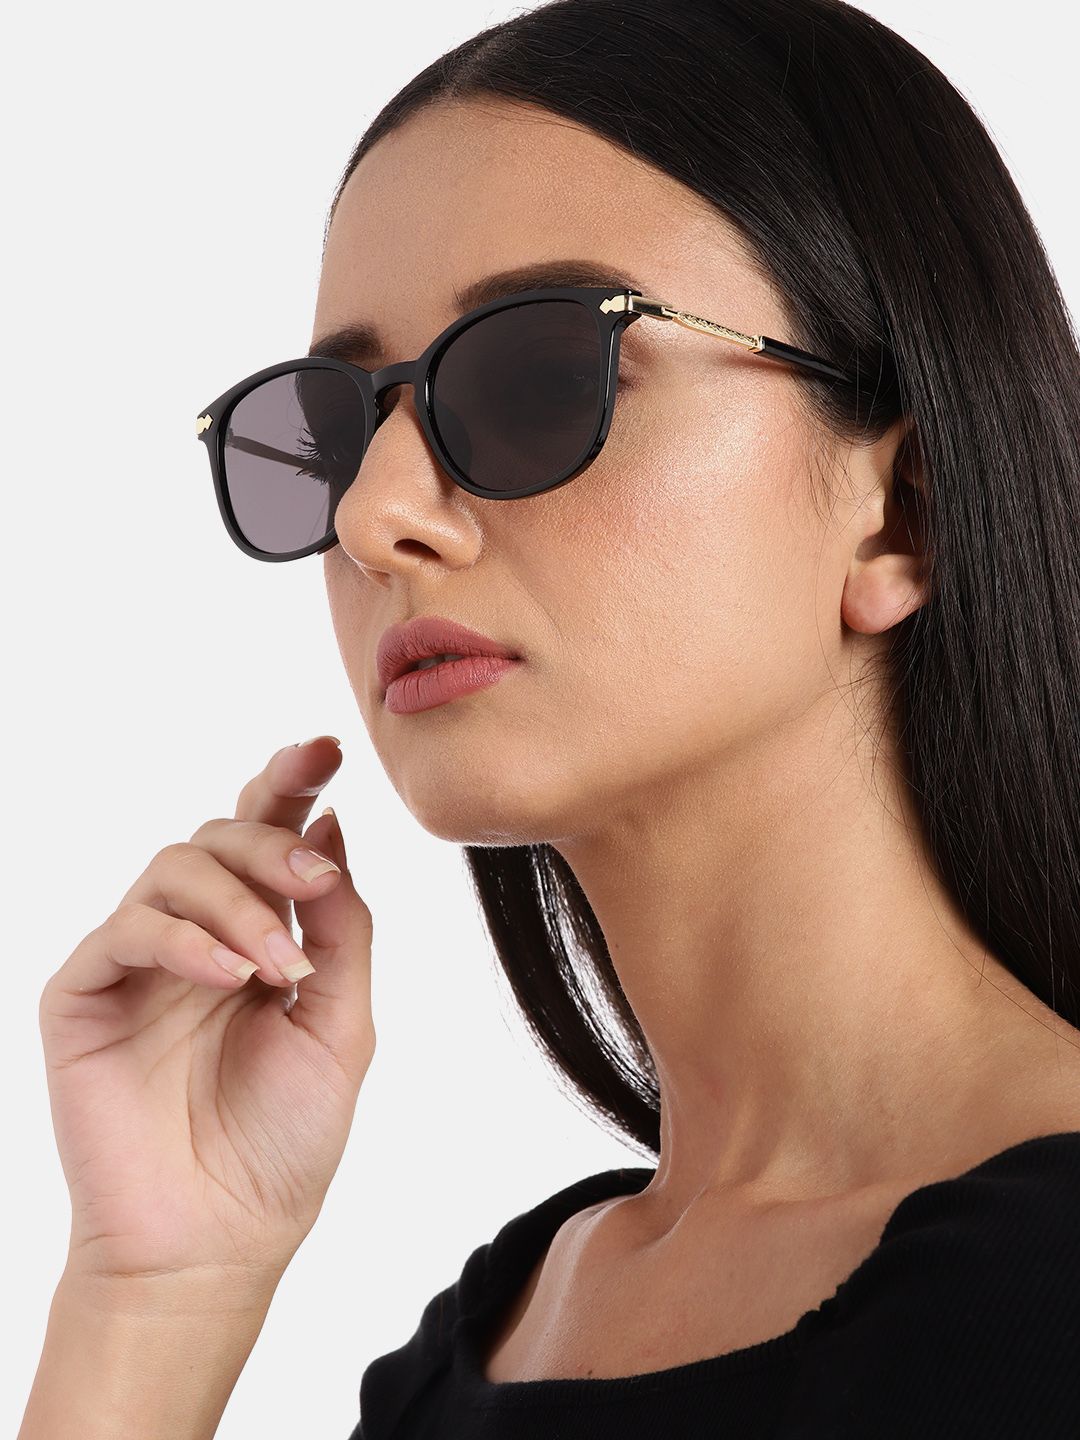 Voyage Women Black UV Protected Wayfarer Sunglasses A3046MG3182 Price in India